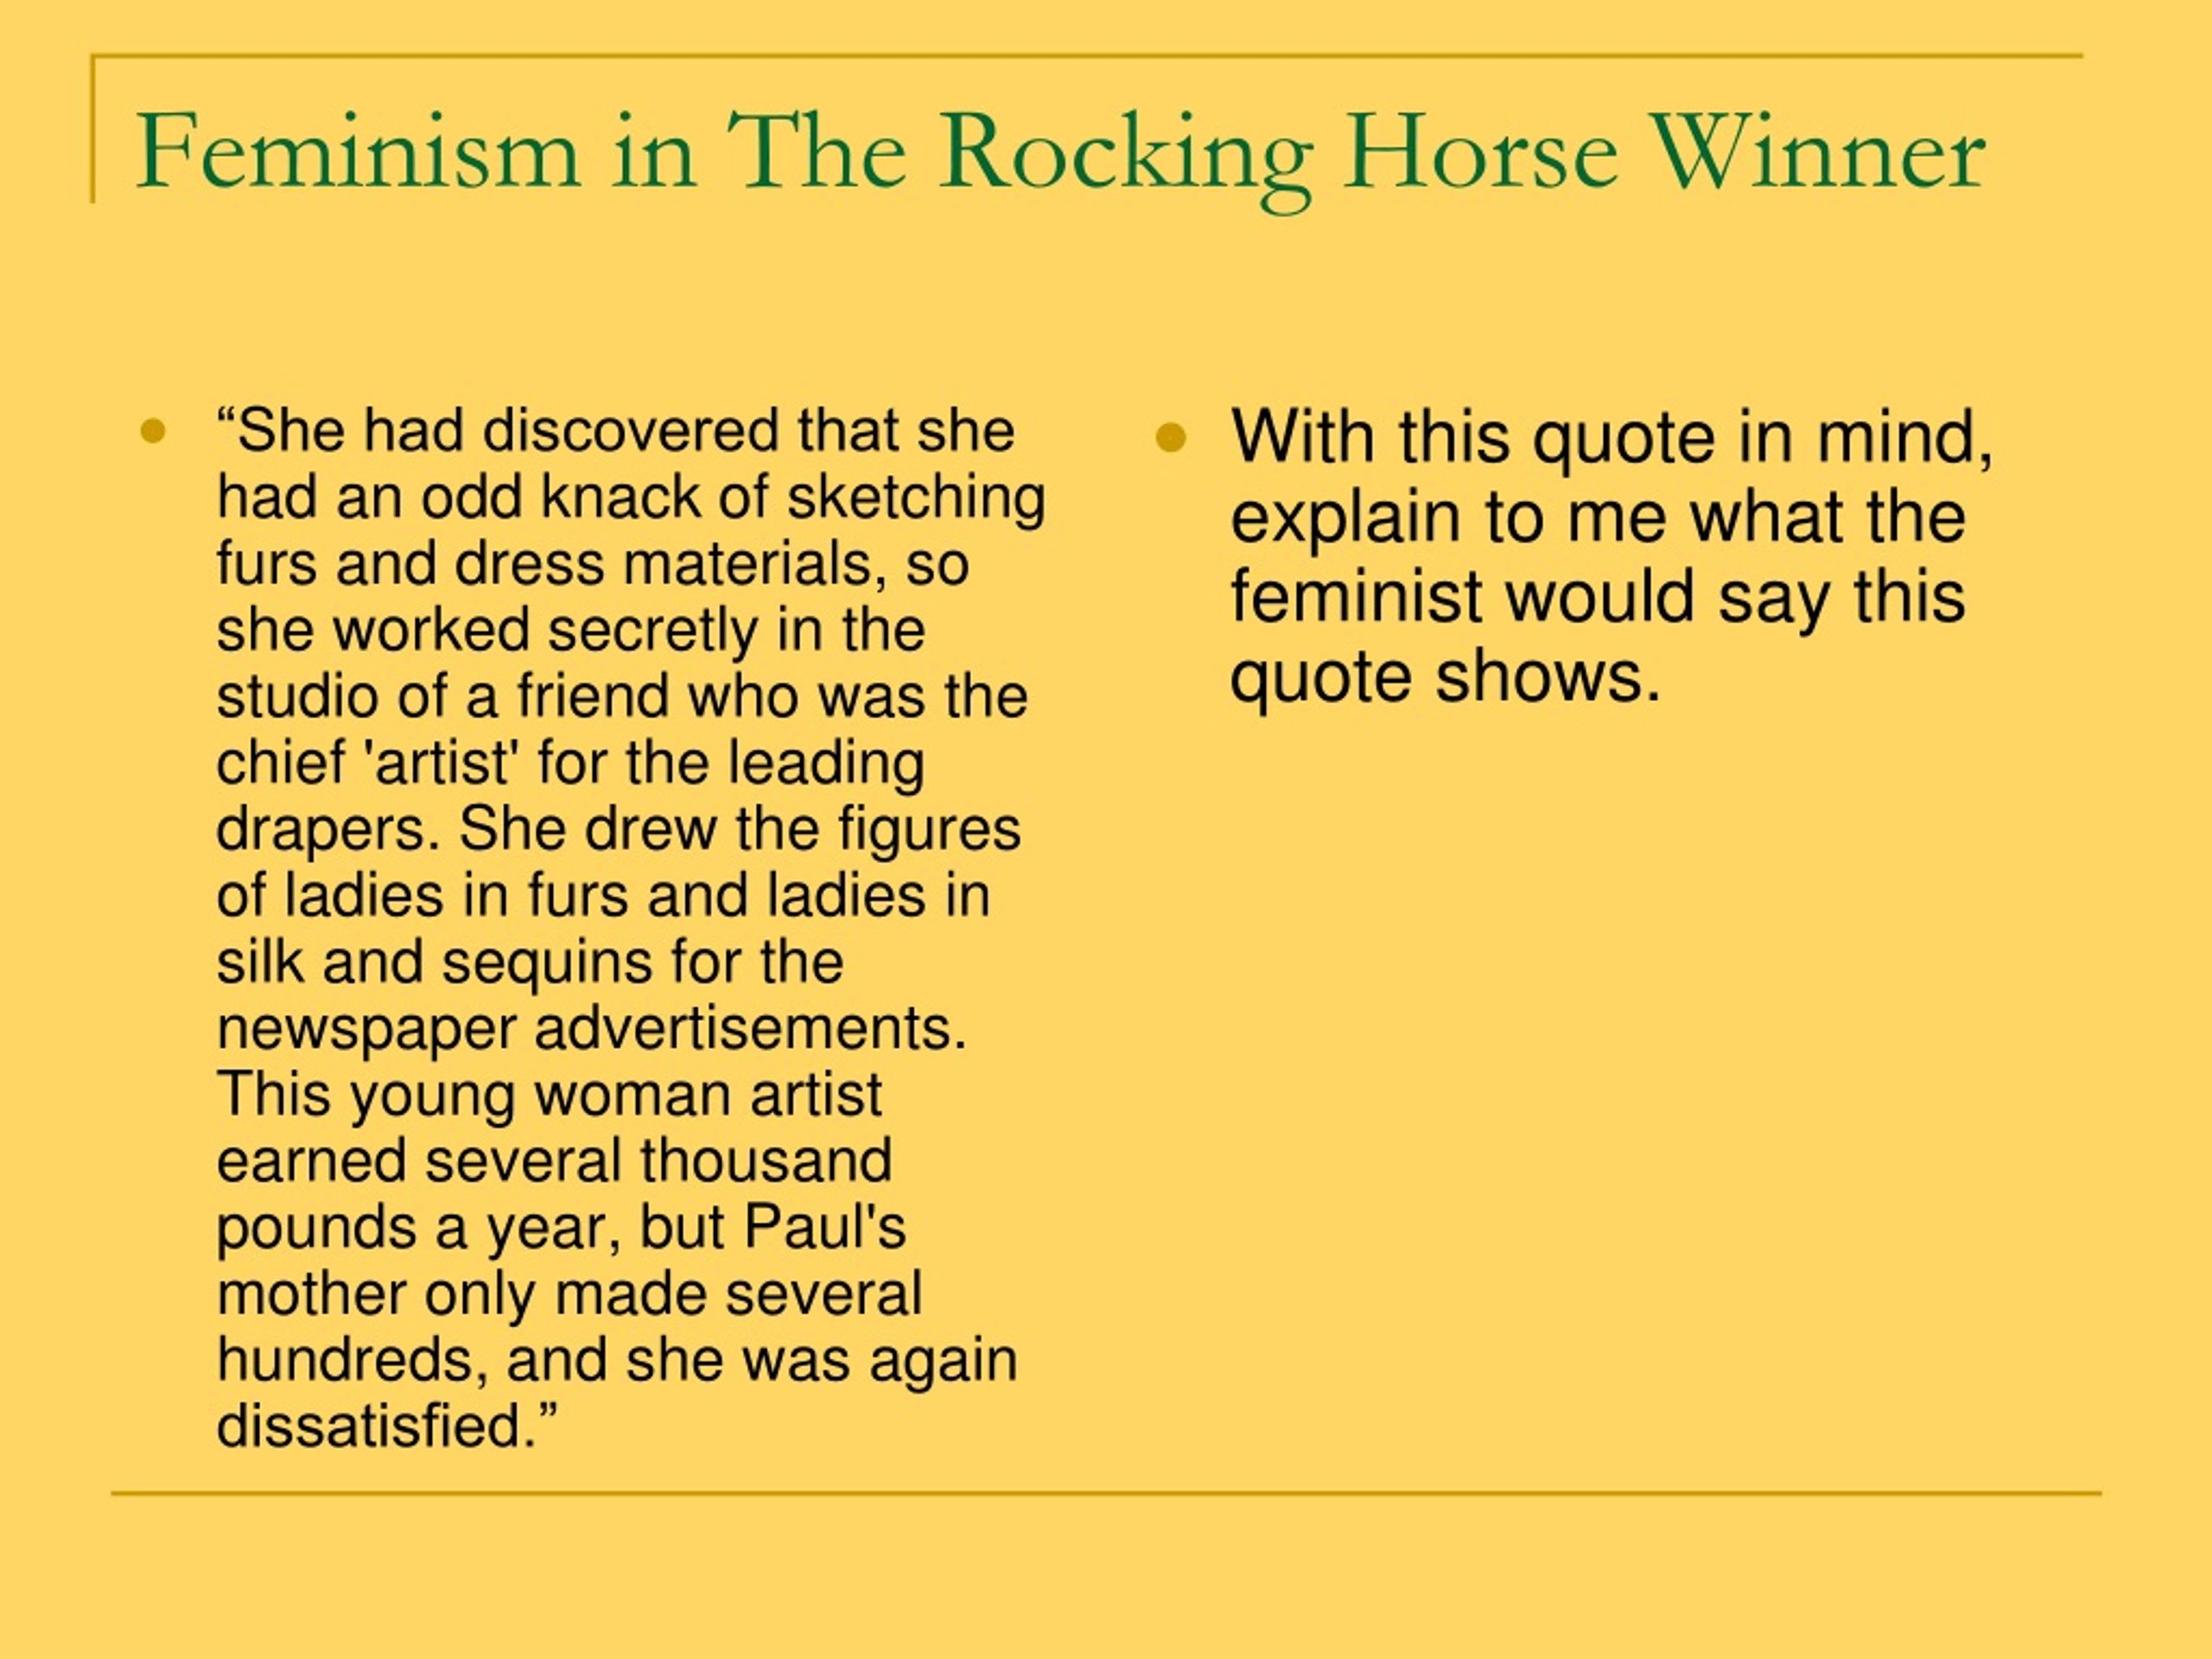 the rocking horse winner summary and analysis